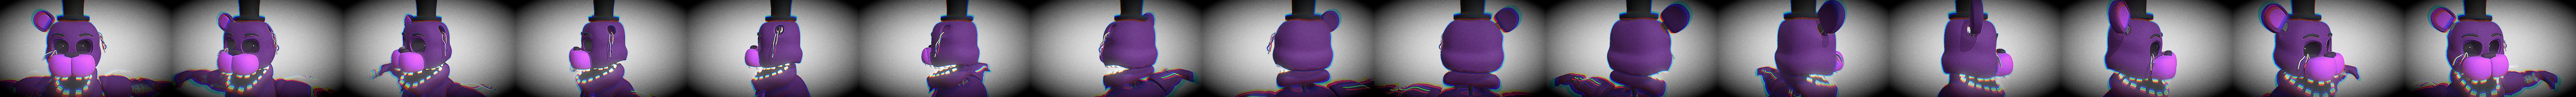 A Shadow Freddy render i made for the Shadow Freddy plushie that